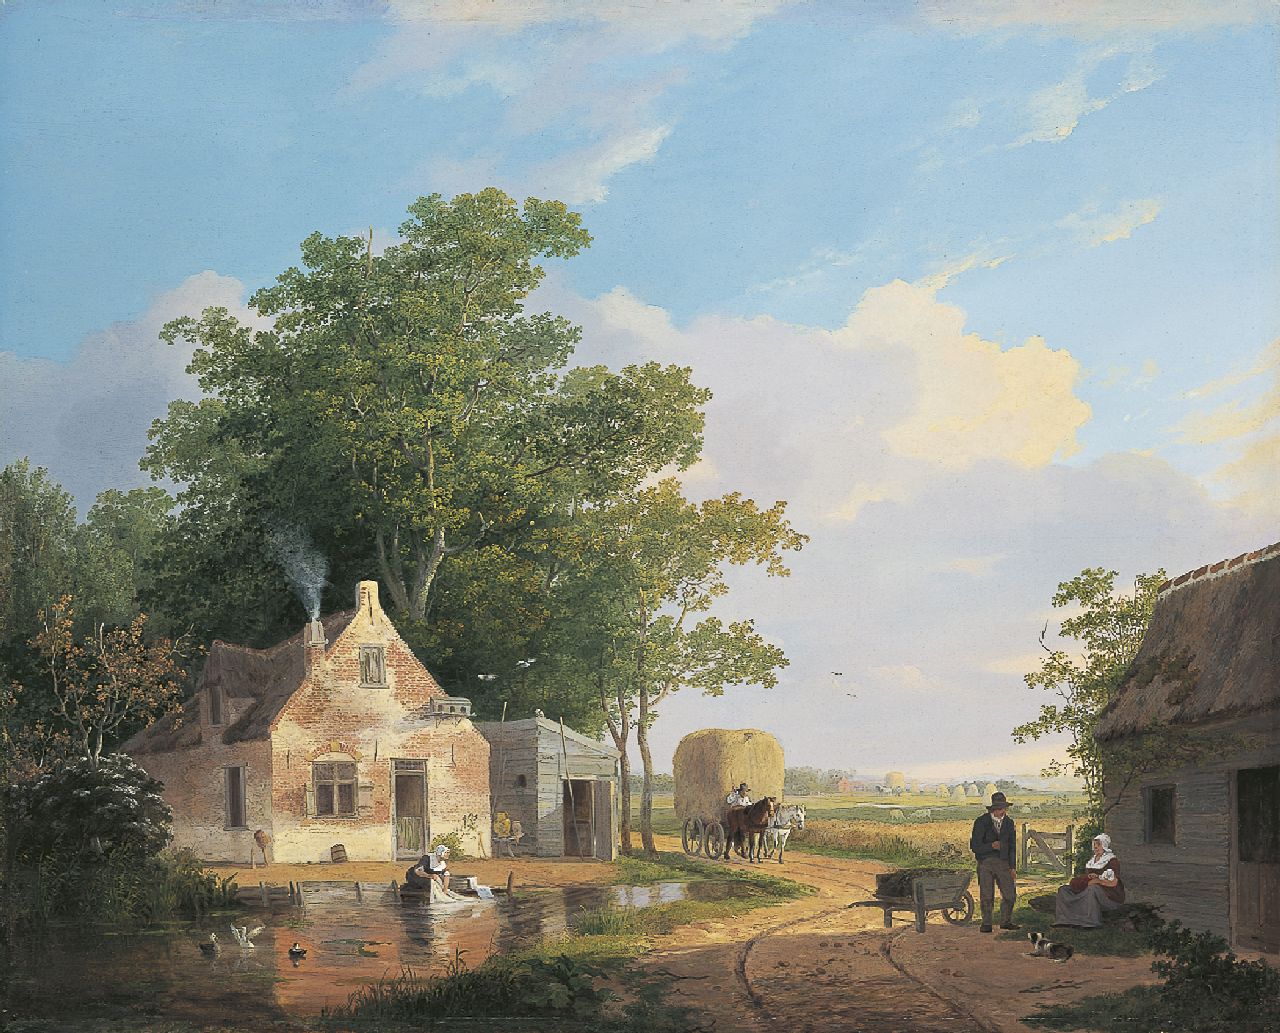 Stok J. van der | Jacobus van der Stok, Idyllic country side, oil on panel 56.5 x 70.0 cm, signed r.c.